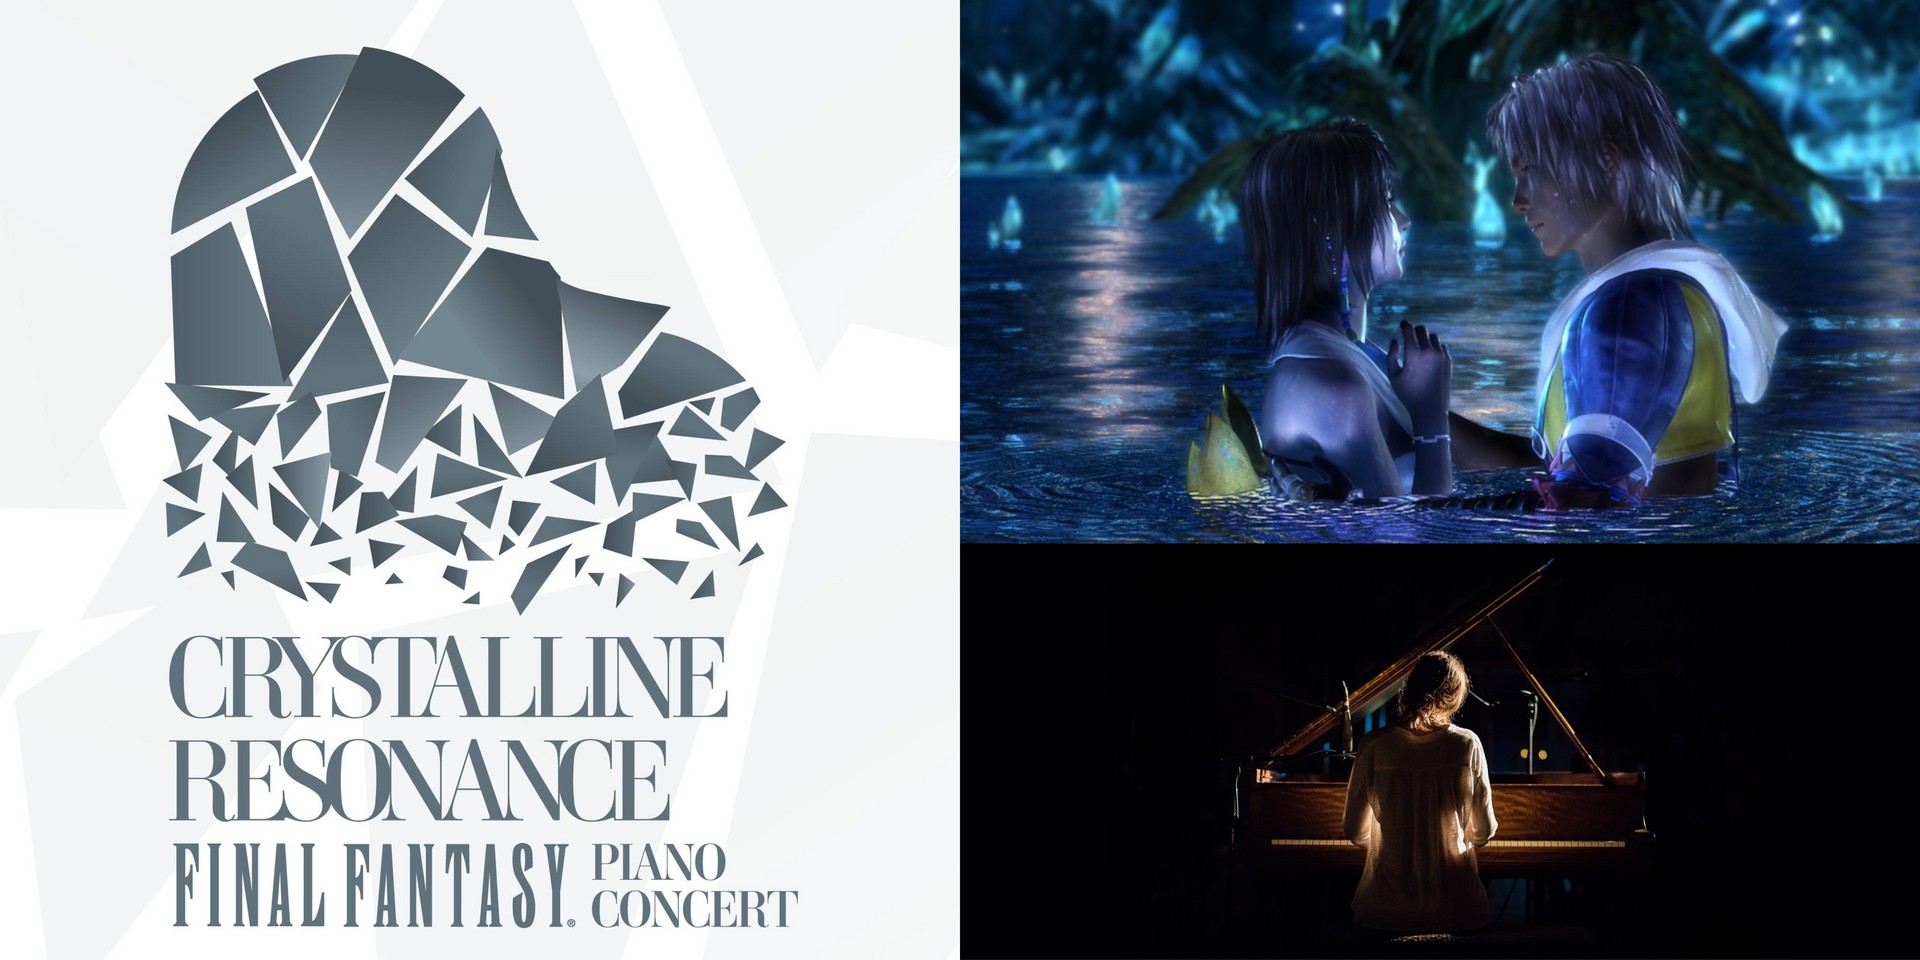 Crystalline Resonance Final Fantasy Piano Concert - 30/03/23 - São Paulo SP